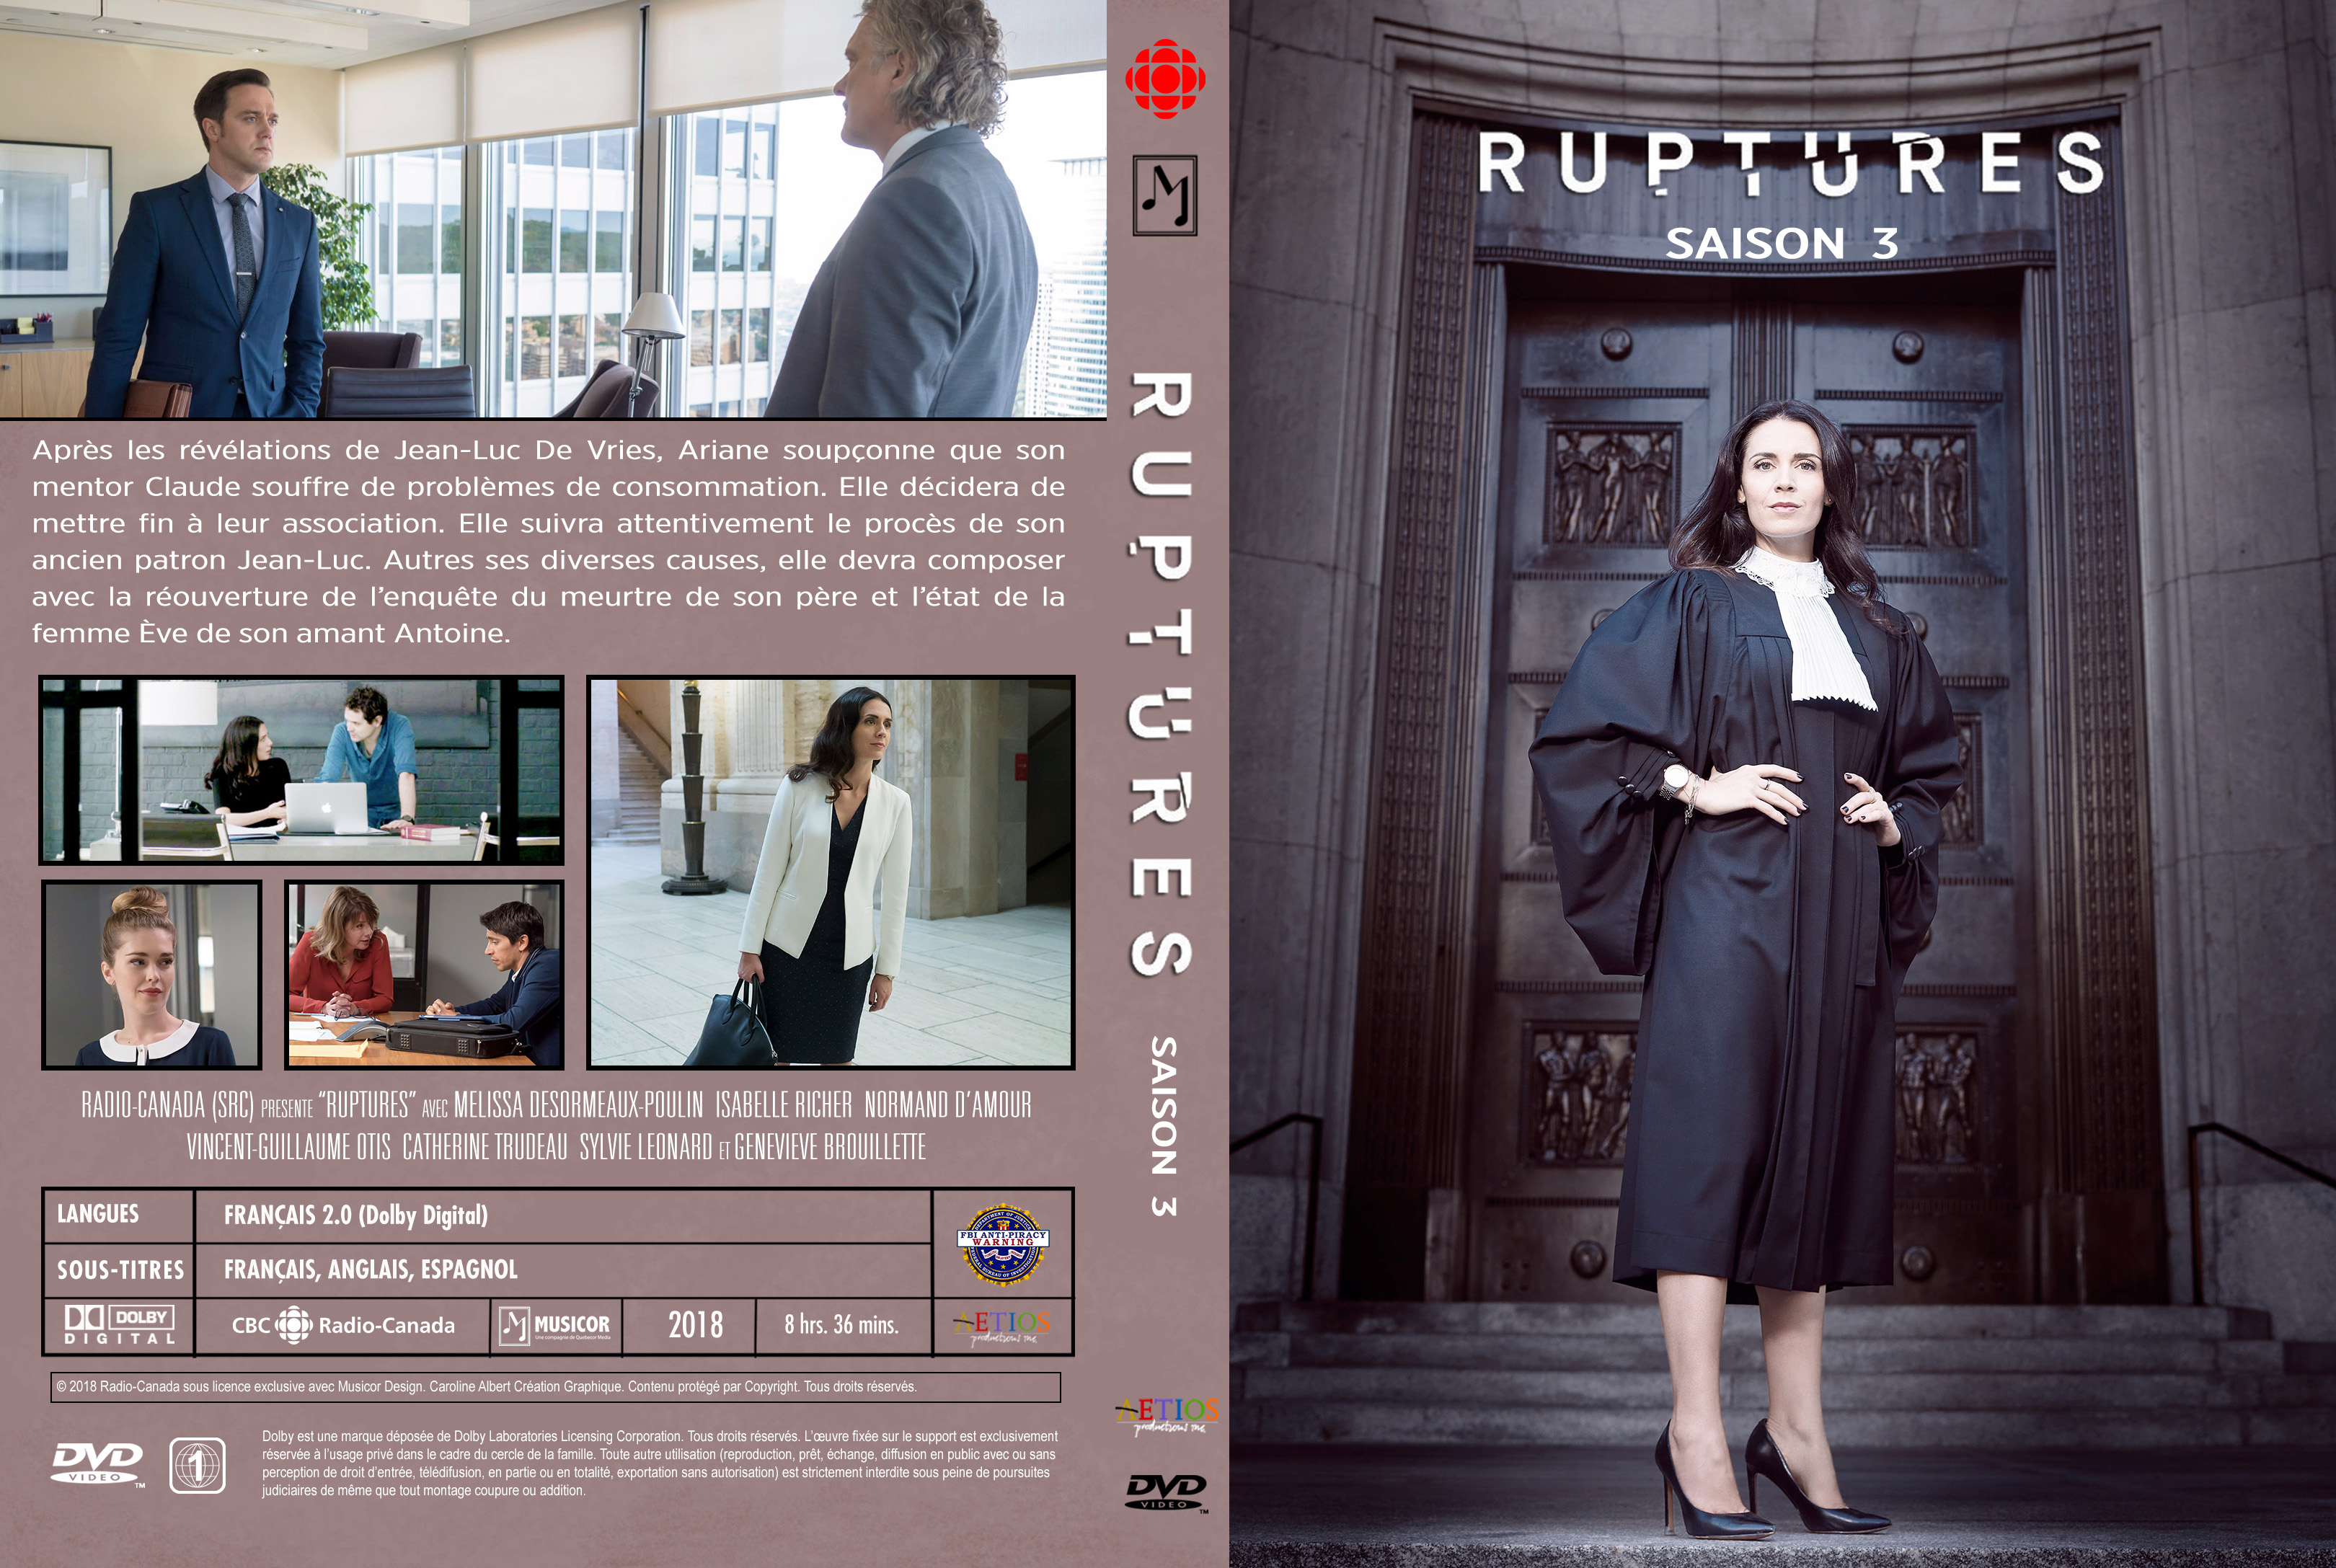 Jaquette DVD Ruptures Saison 3 custom